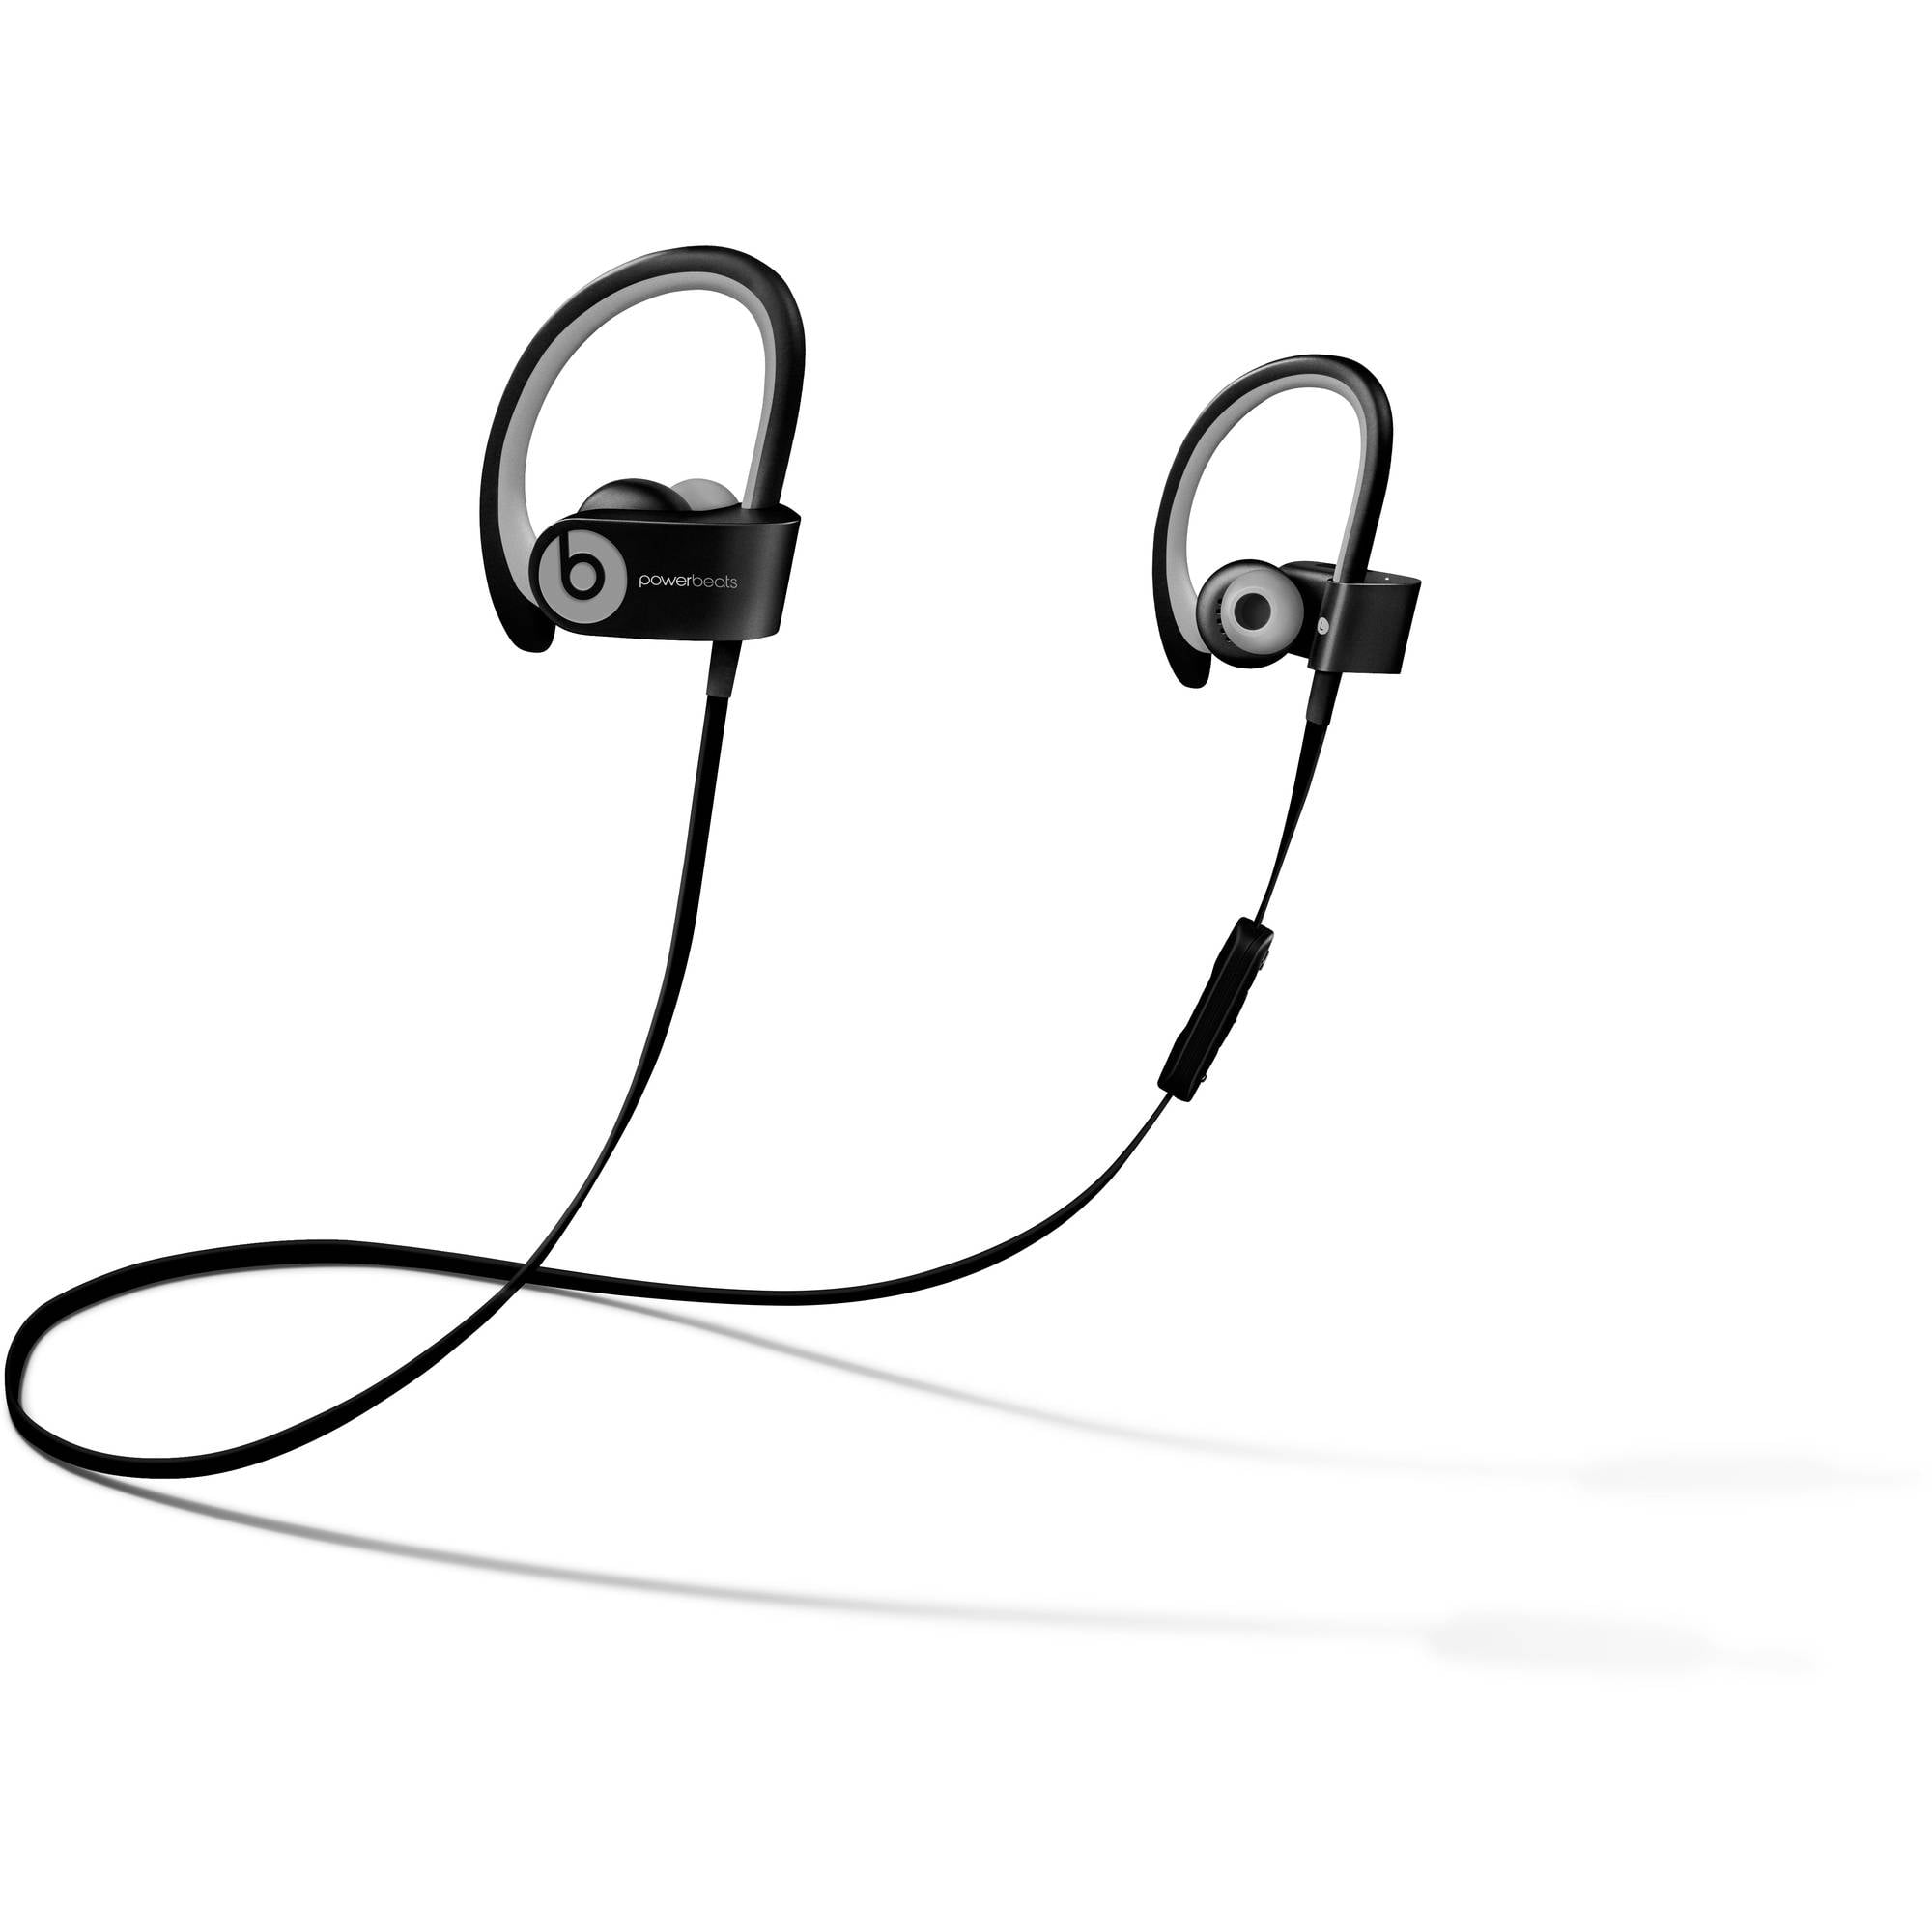 powerbeats 2 wireless headphones